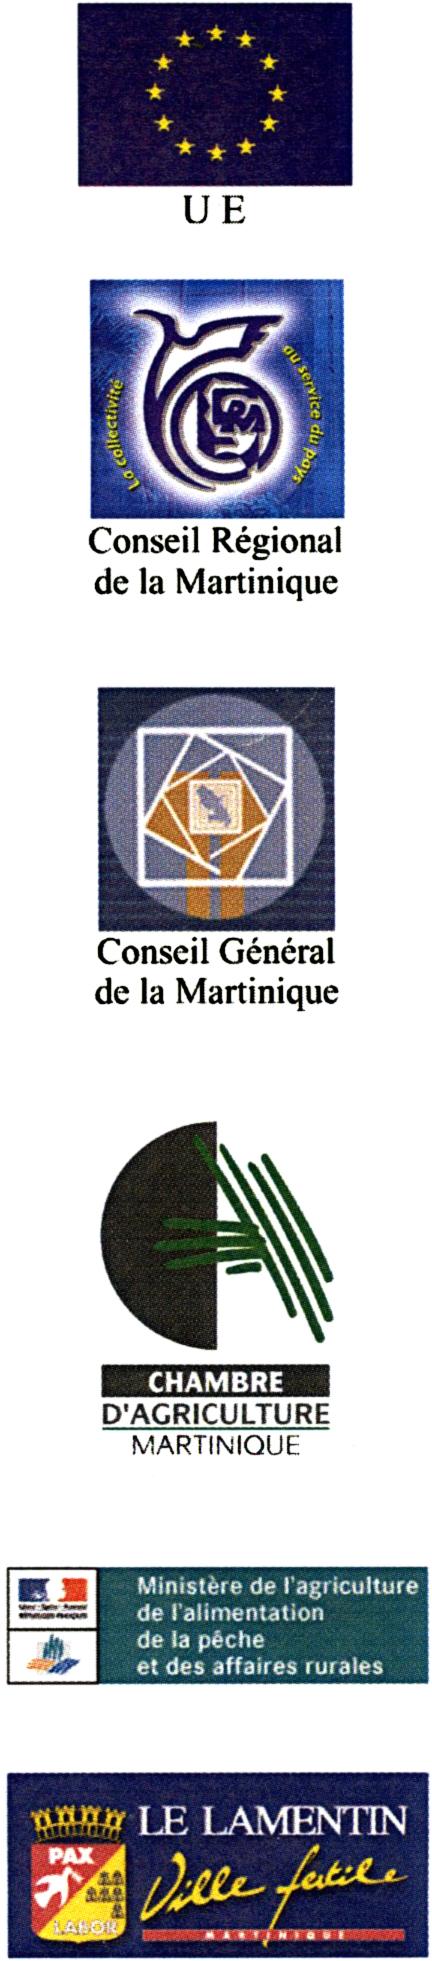 ^foodcrop s & \ Jt. ""^ECARIBBE^ AMADEPA PROCEEDINGS OF THE 38th ANNUAL MEETING June 30,h - July 5,h 2002 Hotel Meridien, Trois-Ilets, Martinique UE "Quel devenir pour l'agriculture caribeenne?